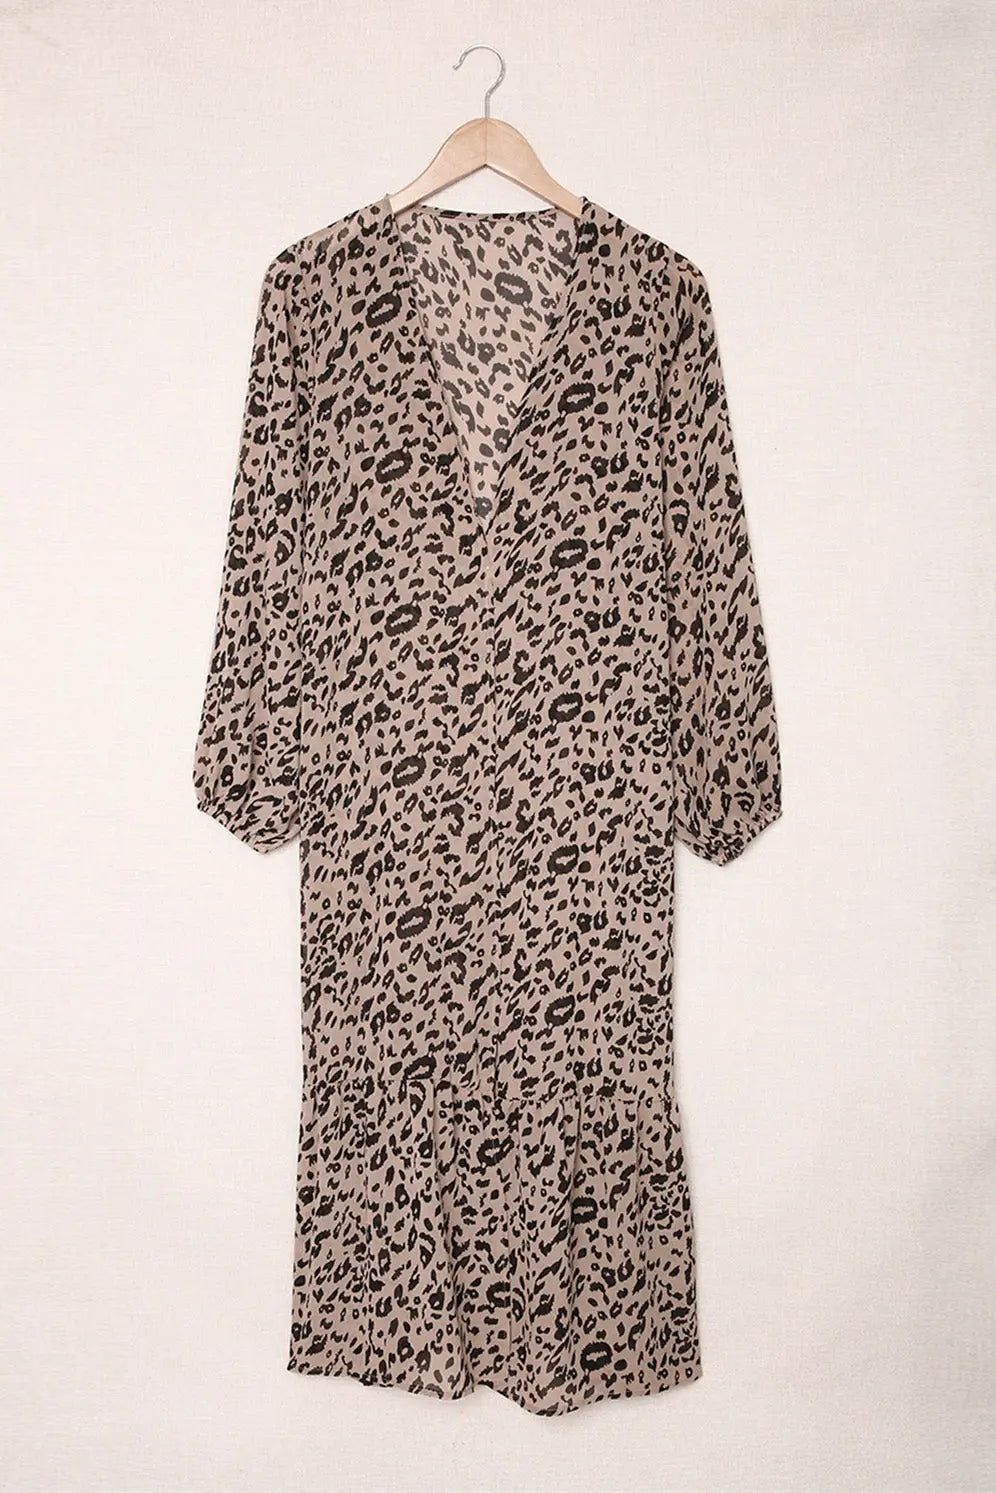 Leopard print duster kimono - outerwear